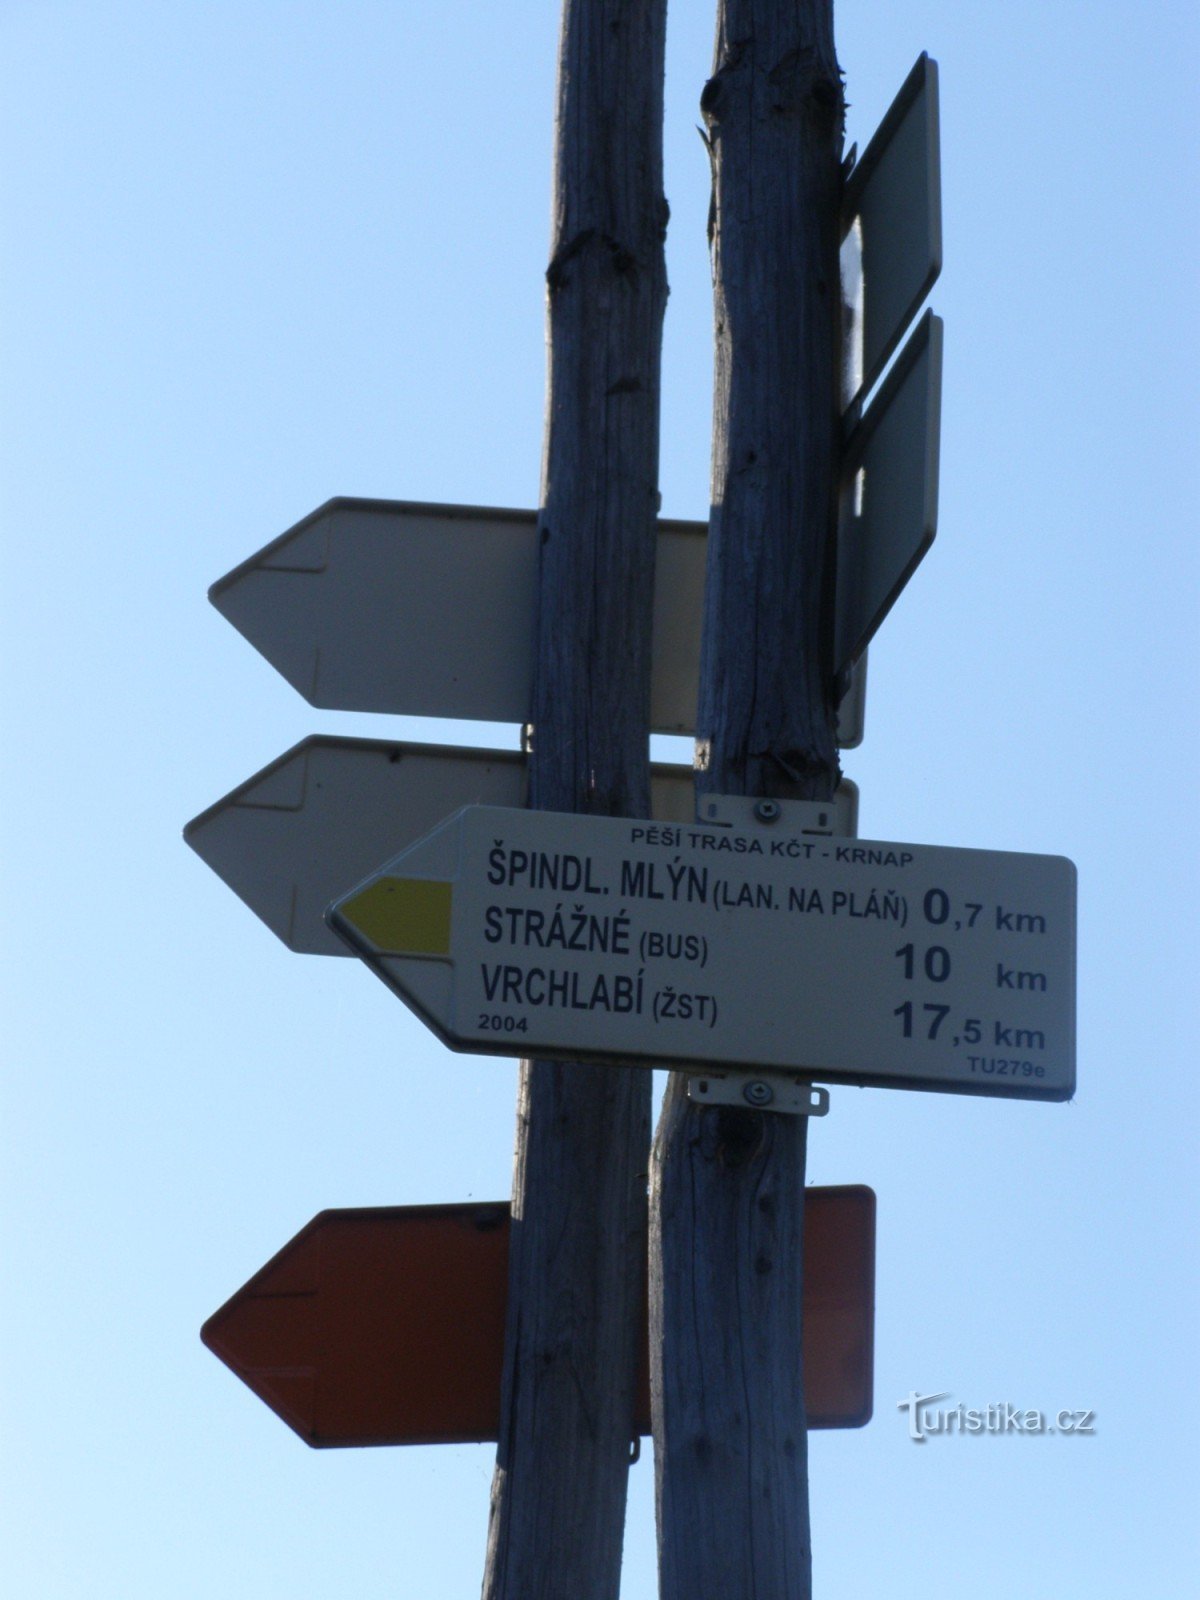 Špindlerův Mlýn turistkryds - ved infocenteret